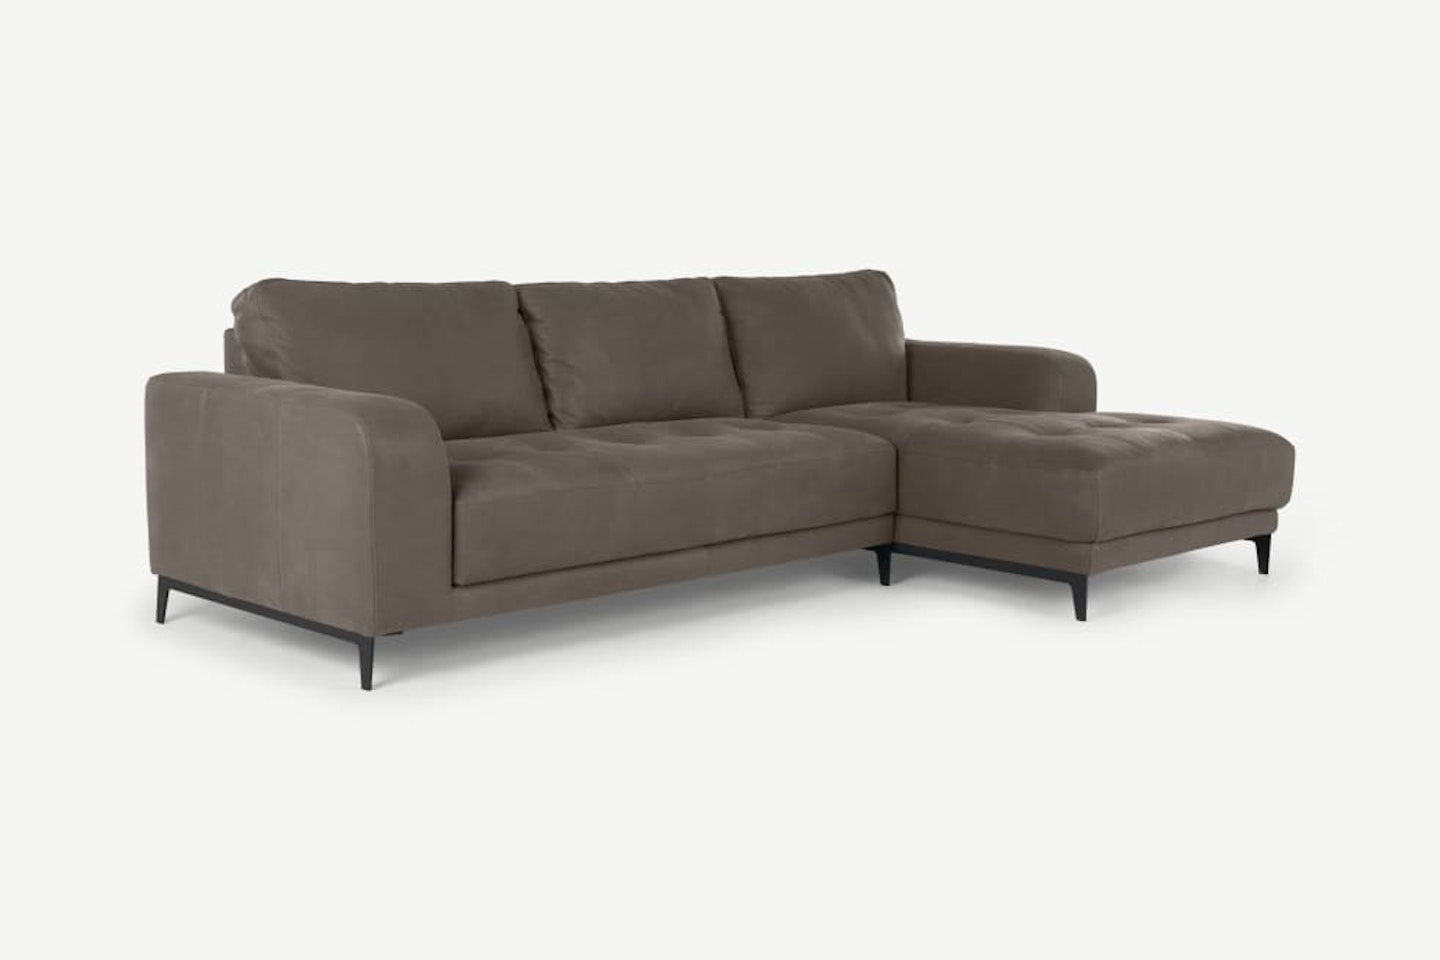 MADE.com Luciano Texas Grey Leather Right Hand Corner Sofa, £534.99